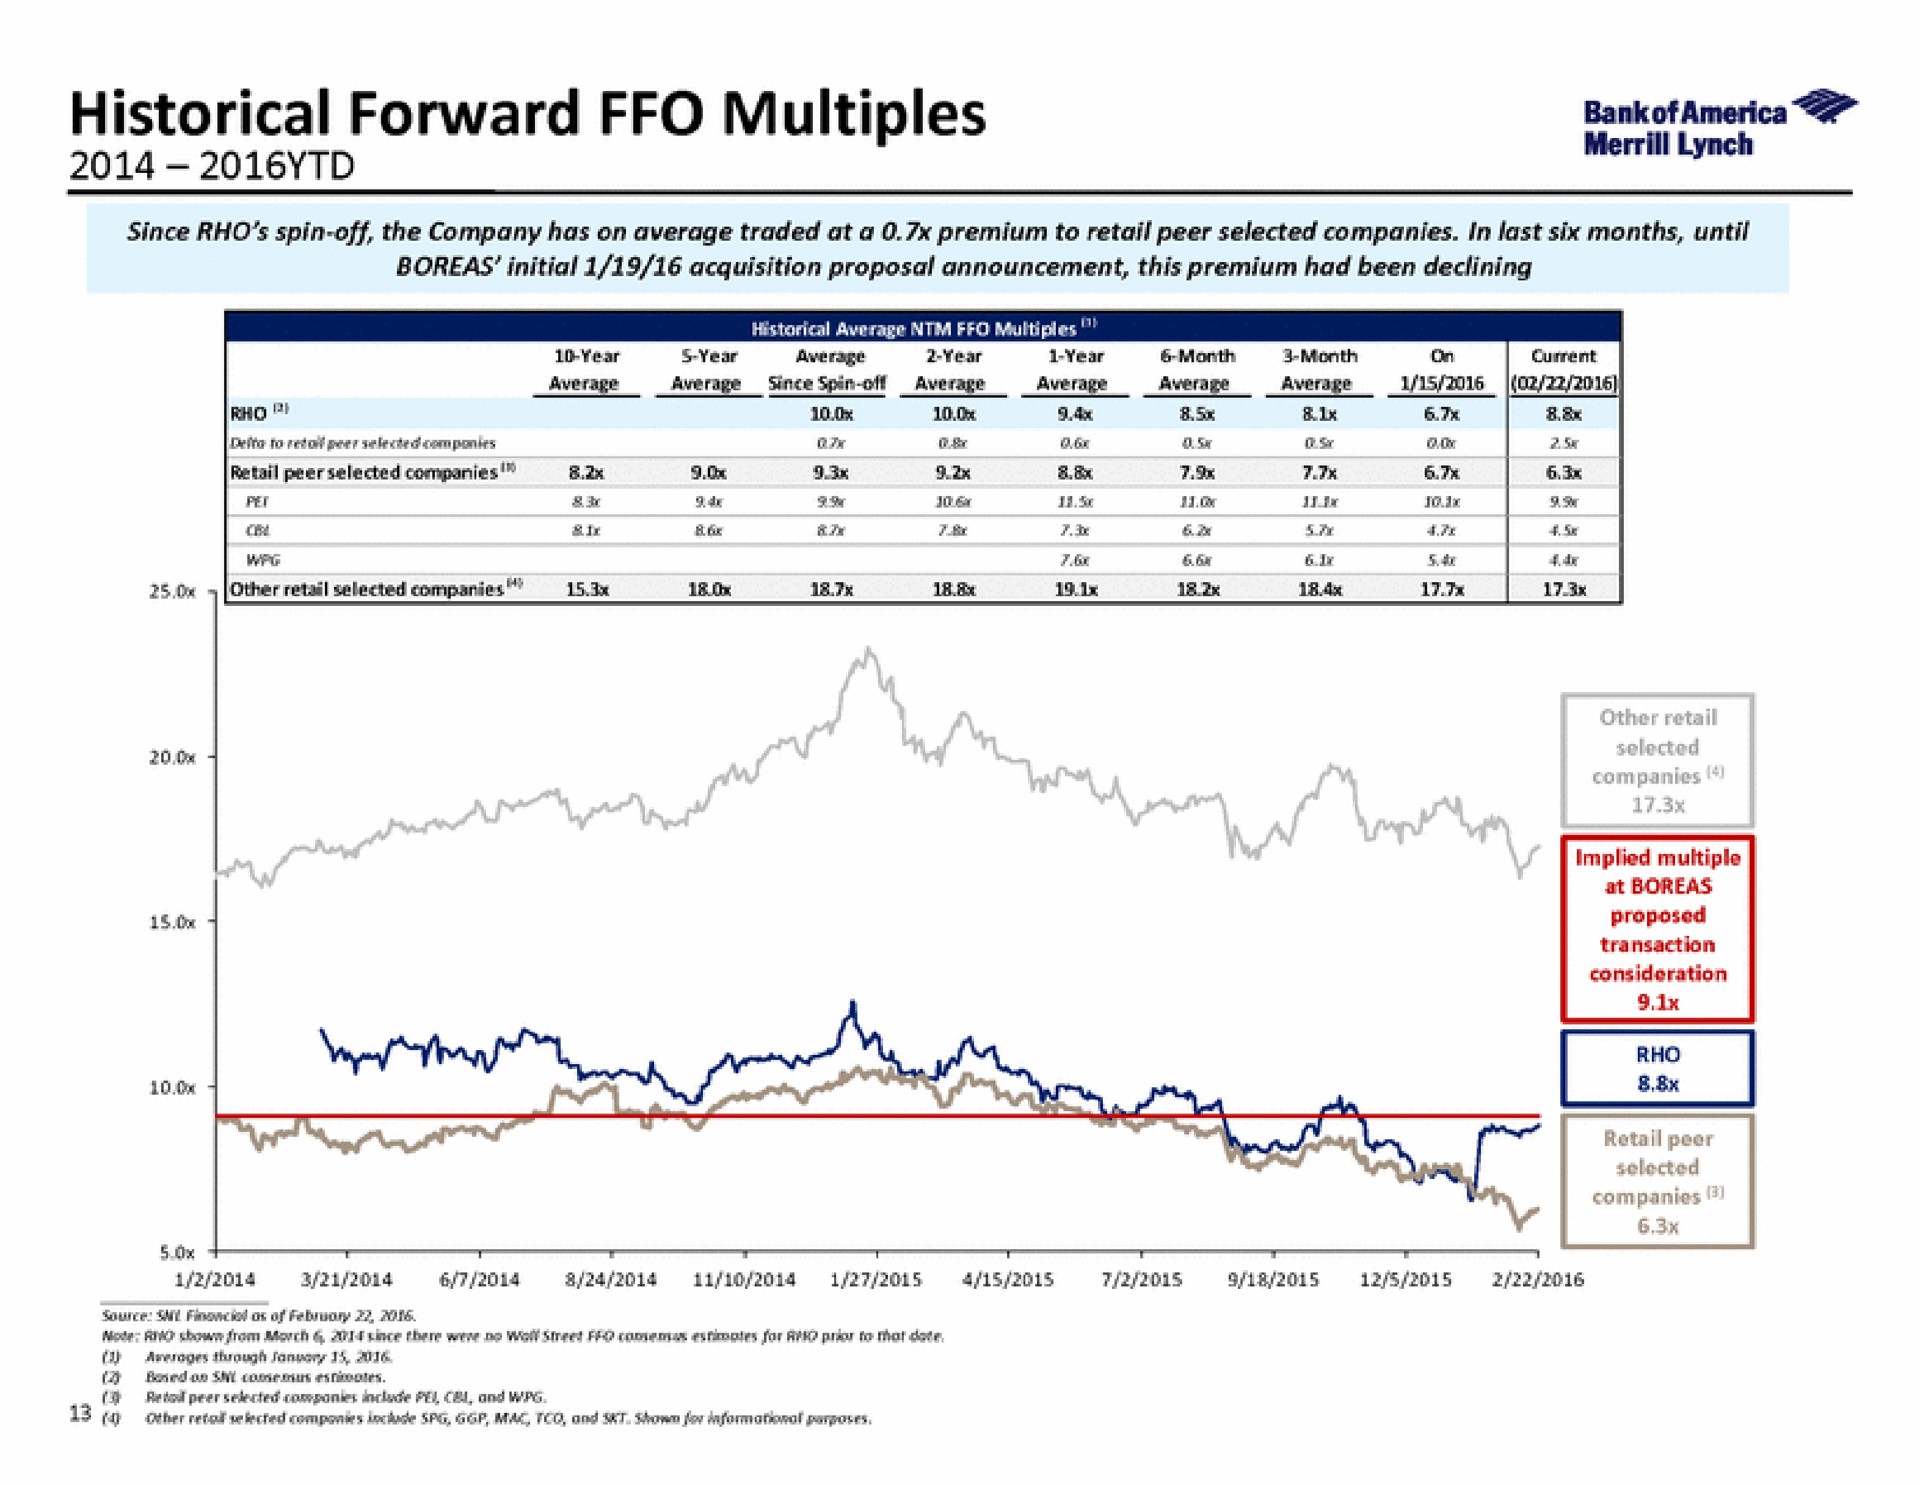 historical forward multiples | Bank of America